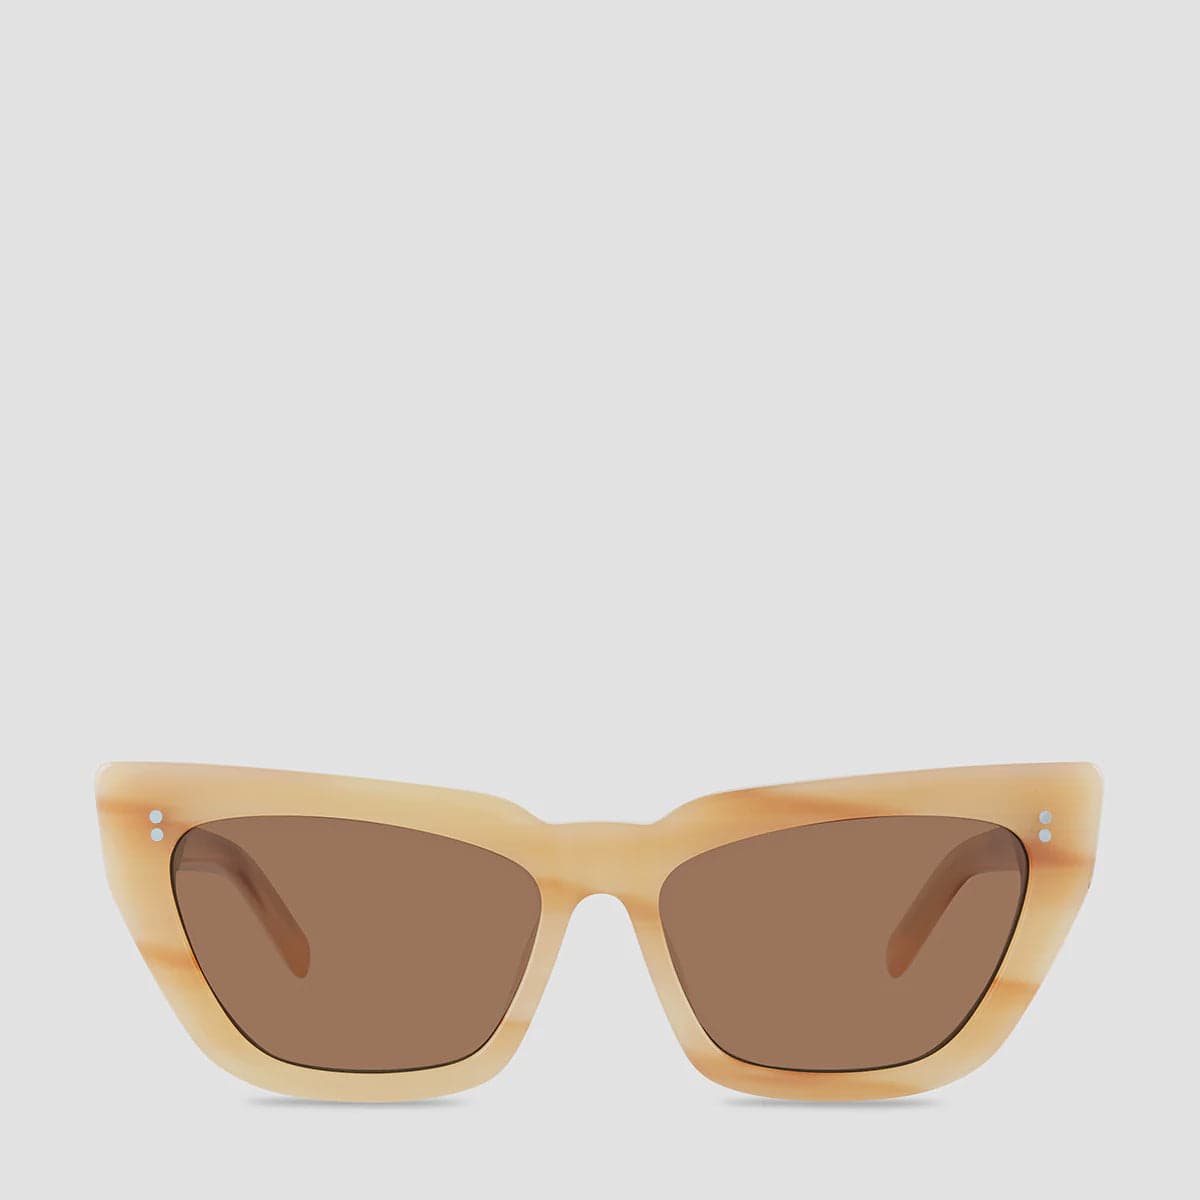 Status Anxiety Sunglasses Status Anxiety | Desolate Sunglasses - Blonde